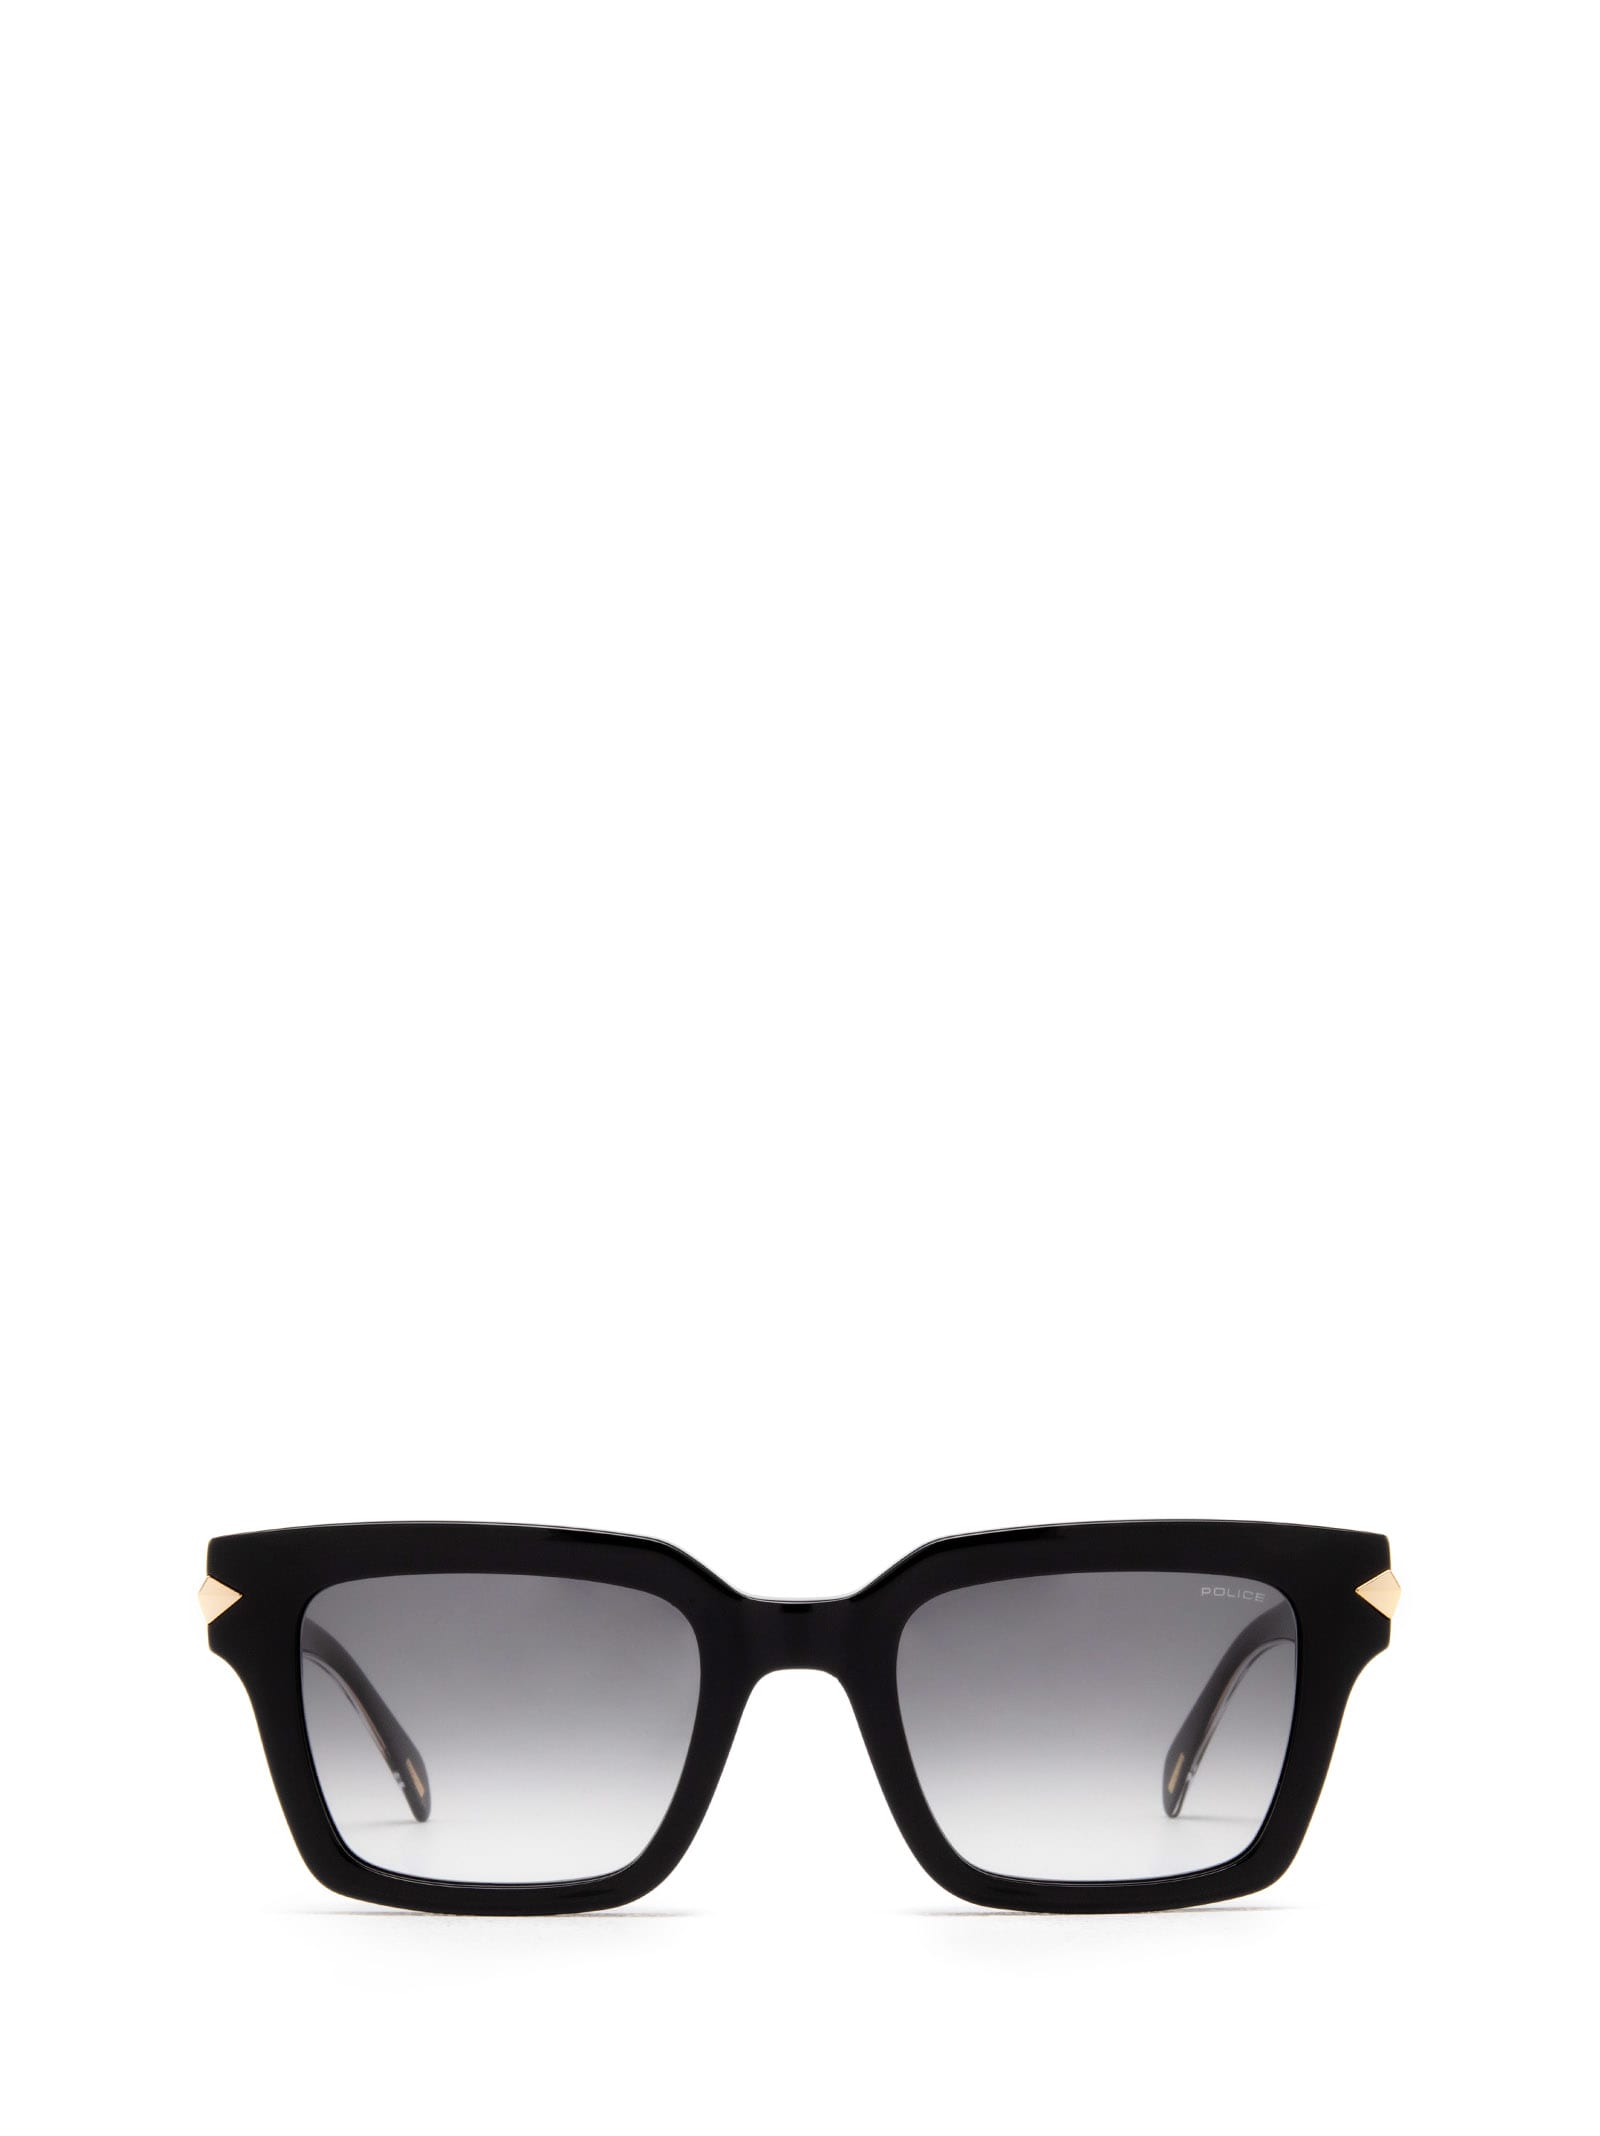 Splf32 Black Sunglasses